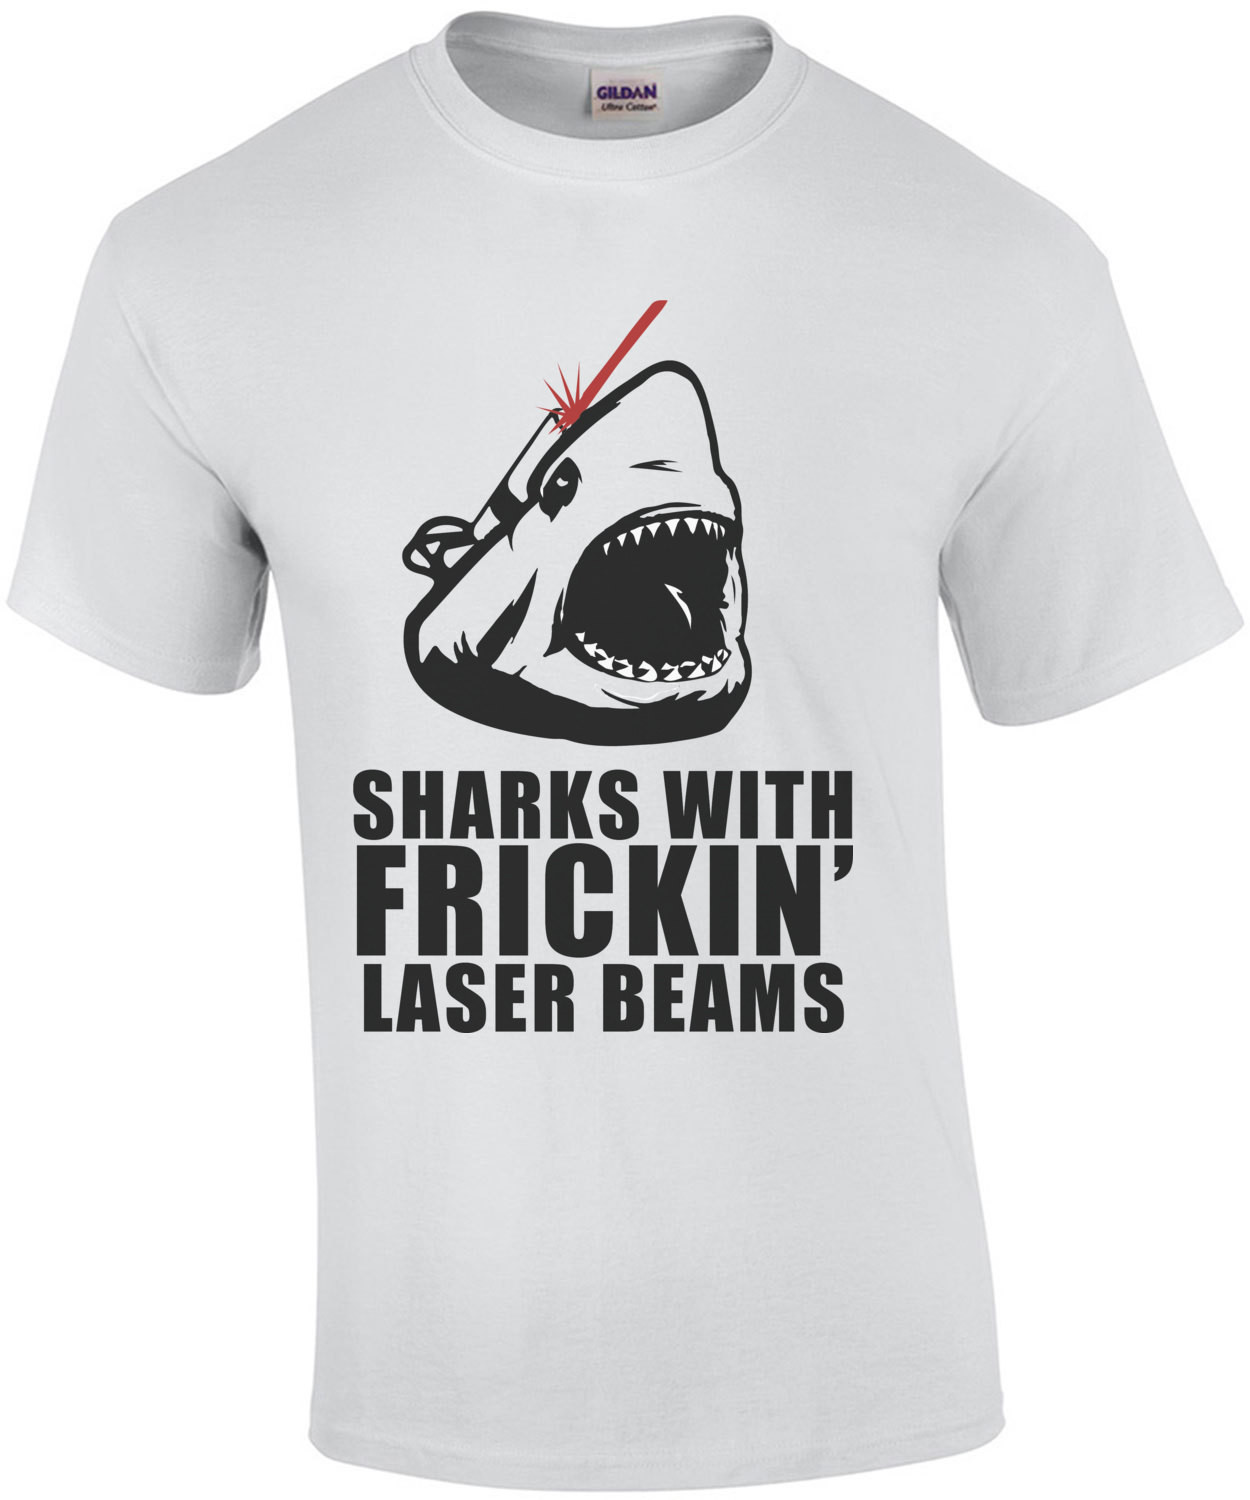 Sharks with frickin laser beams - austin powers t-shirt